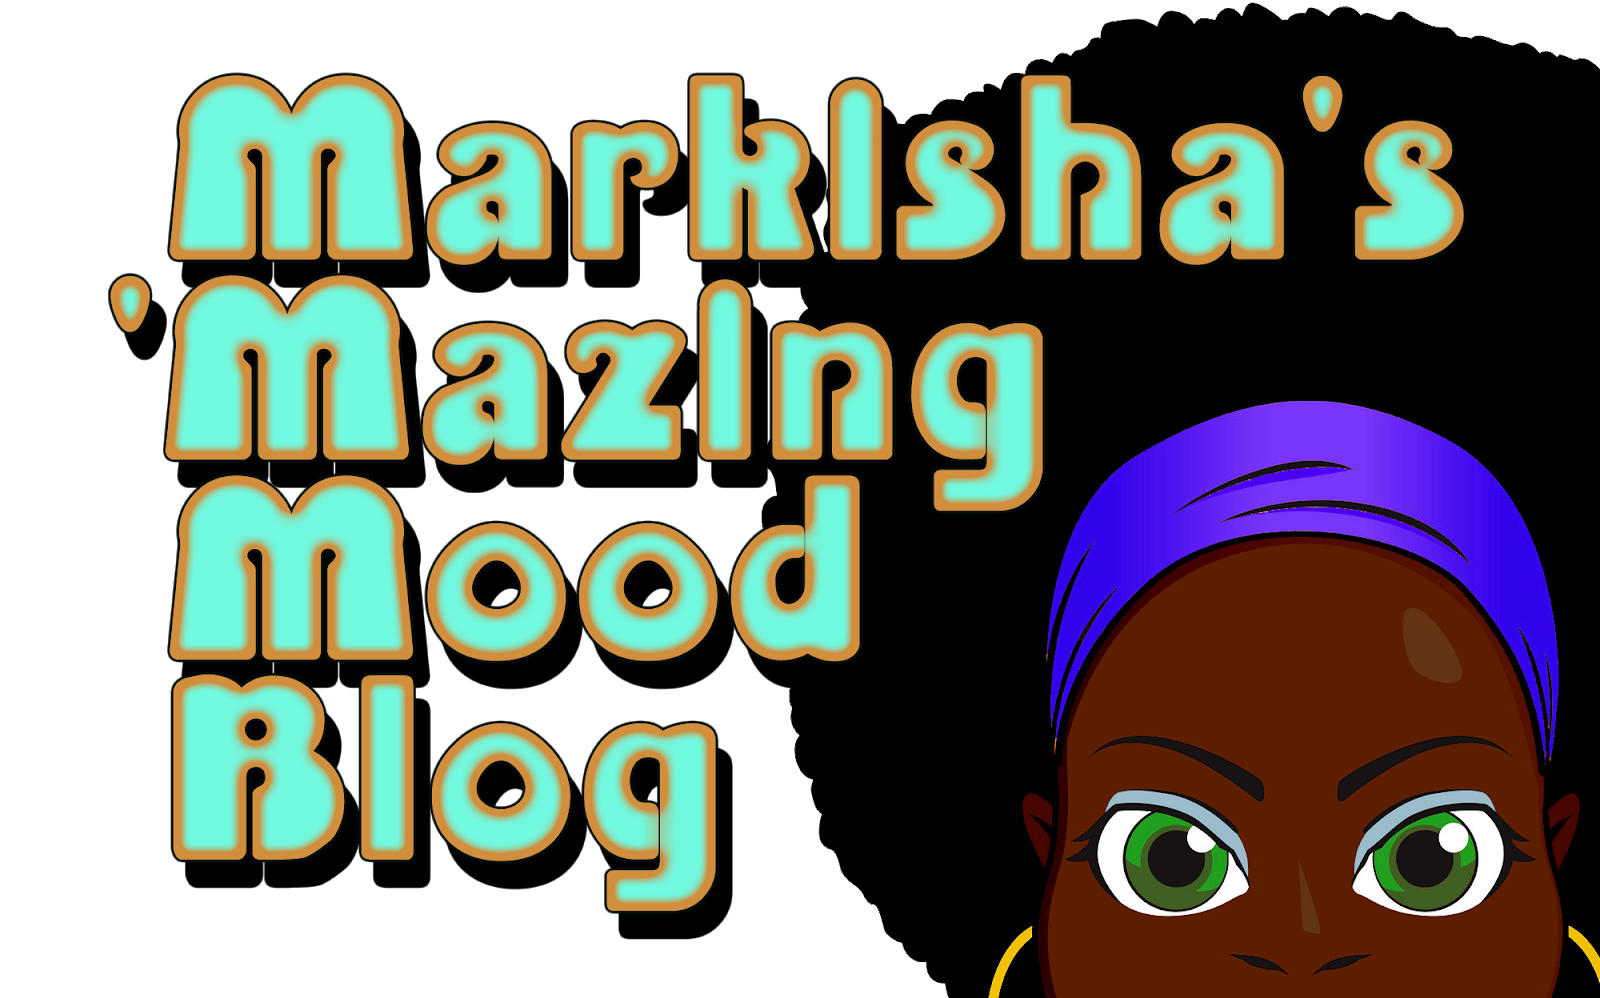 Markisha's 'Mazing Mood Blog